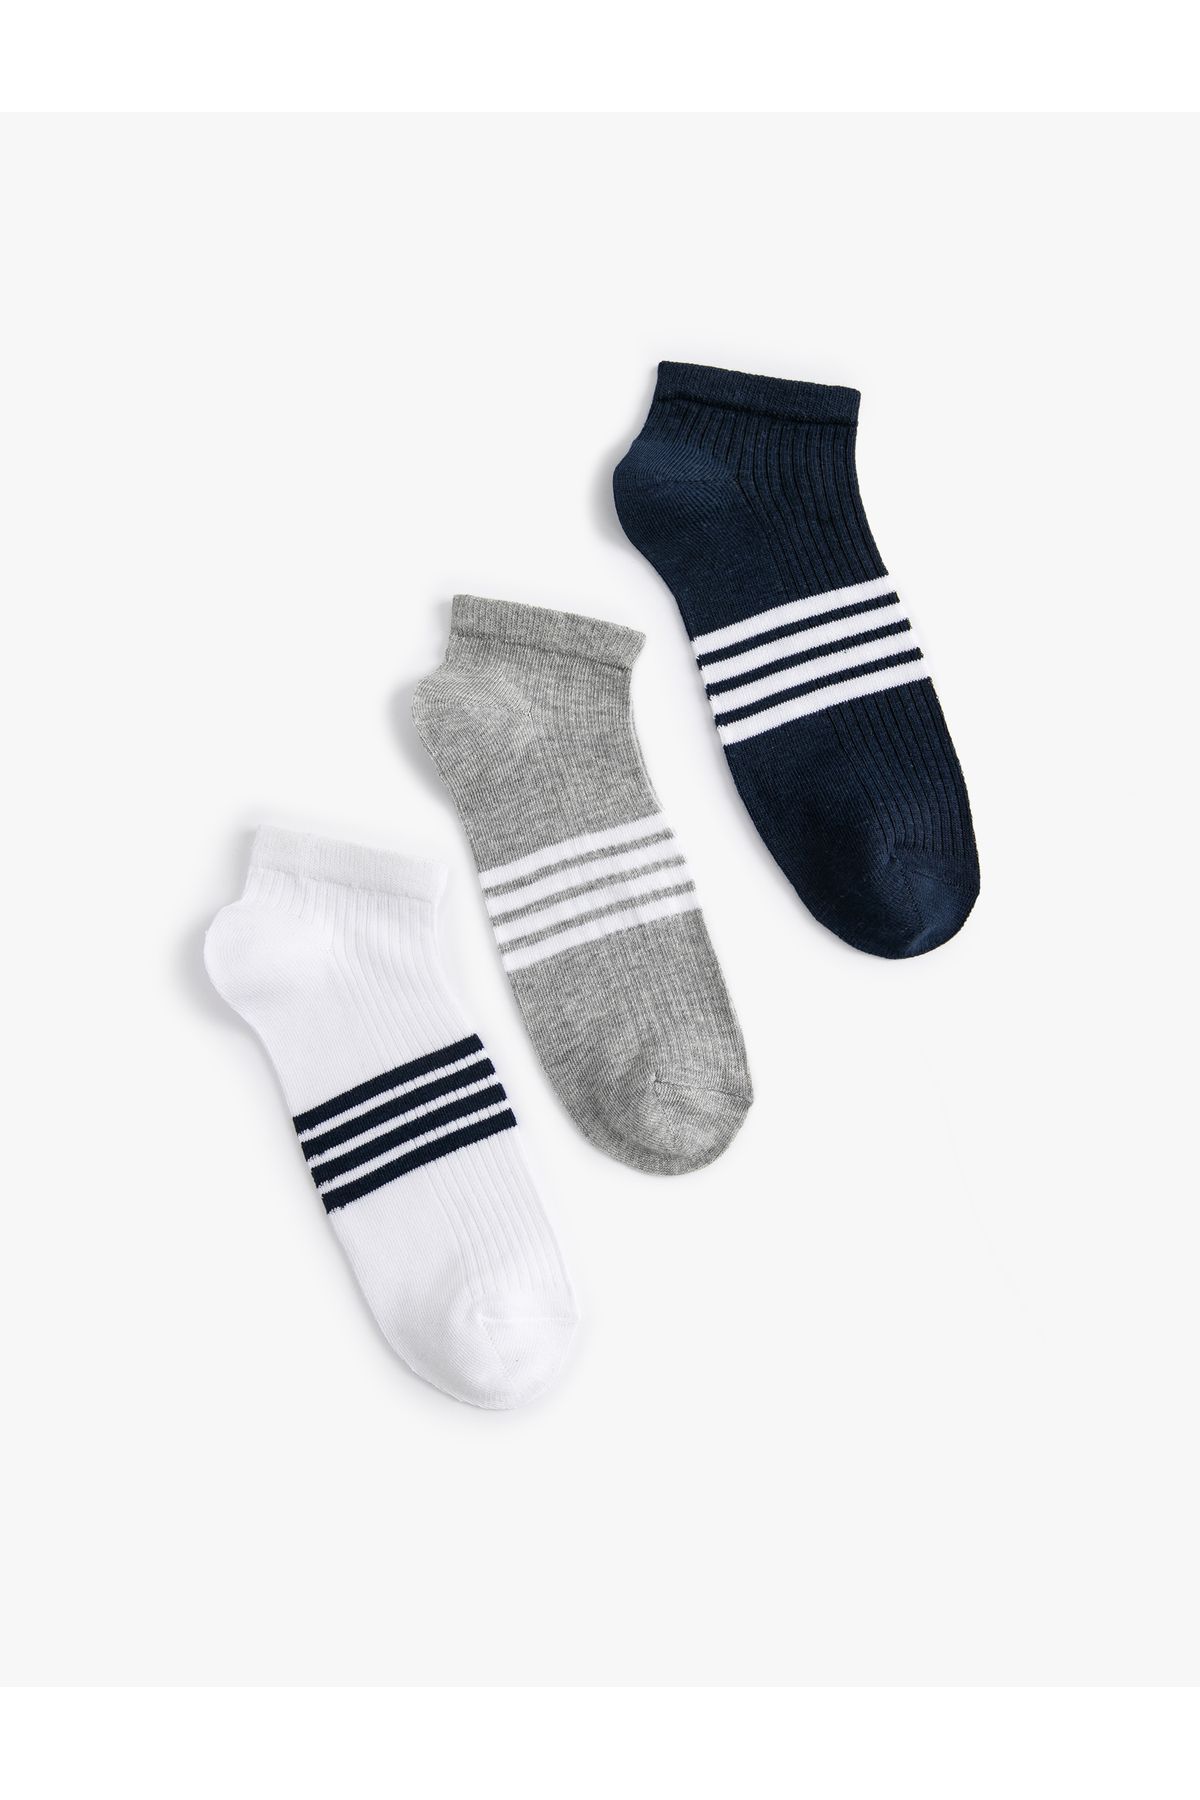 Koton Spor Çorap Seti Çizgili 3'lü Çok Renkli